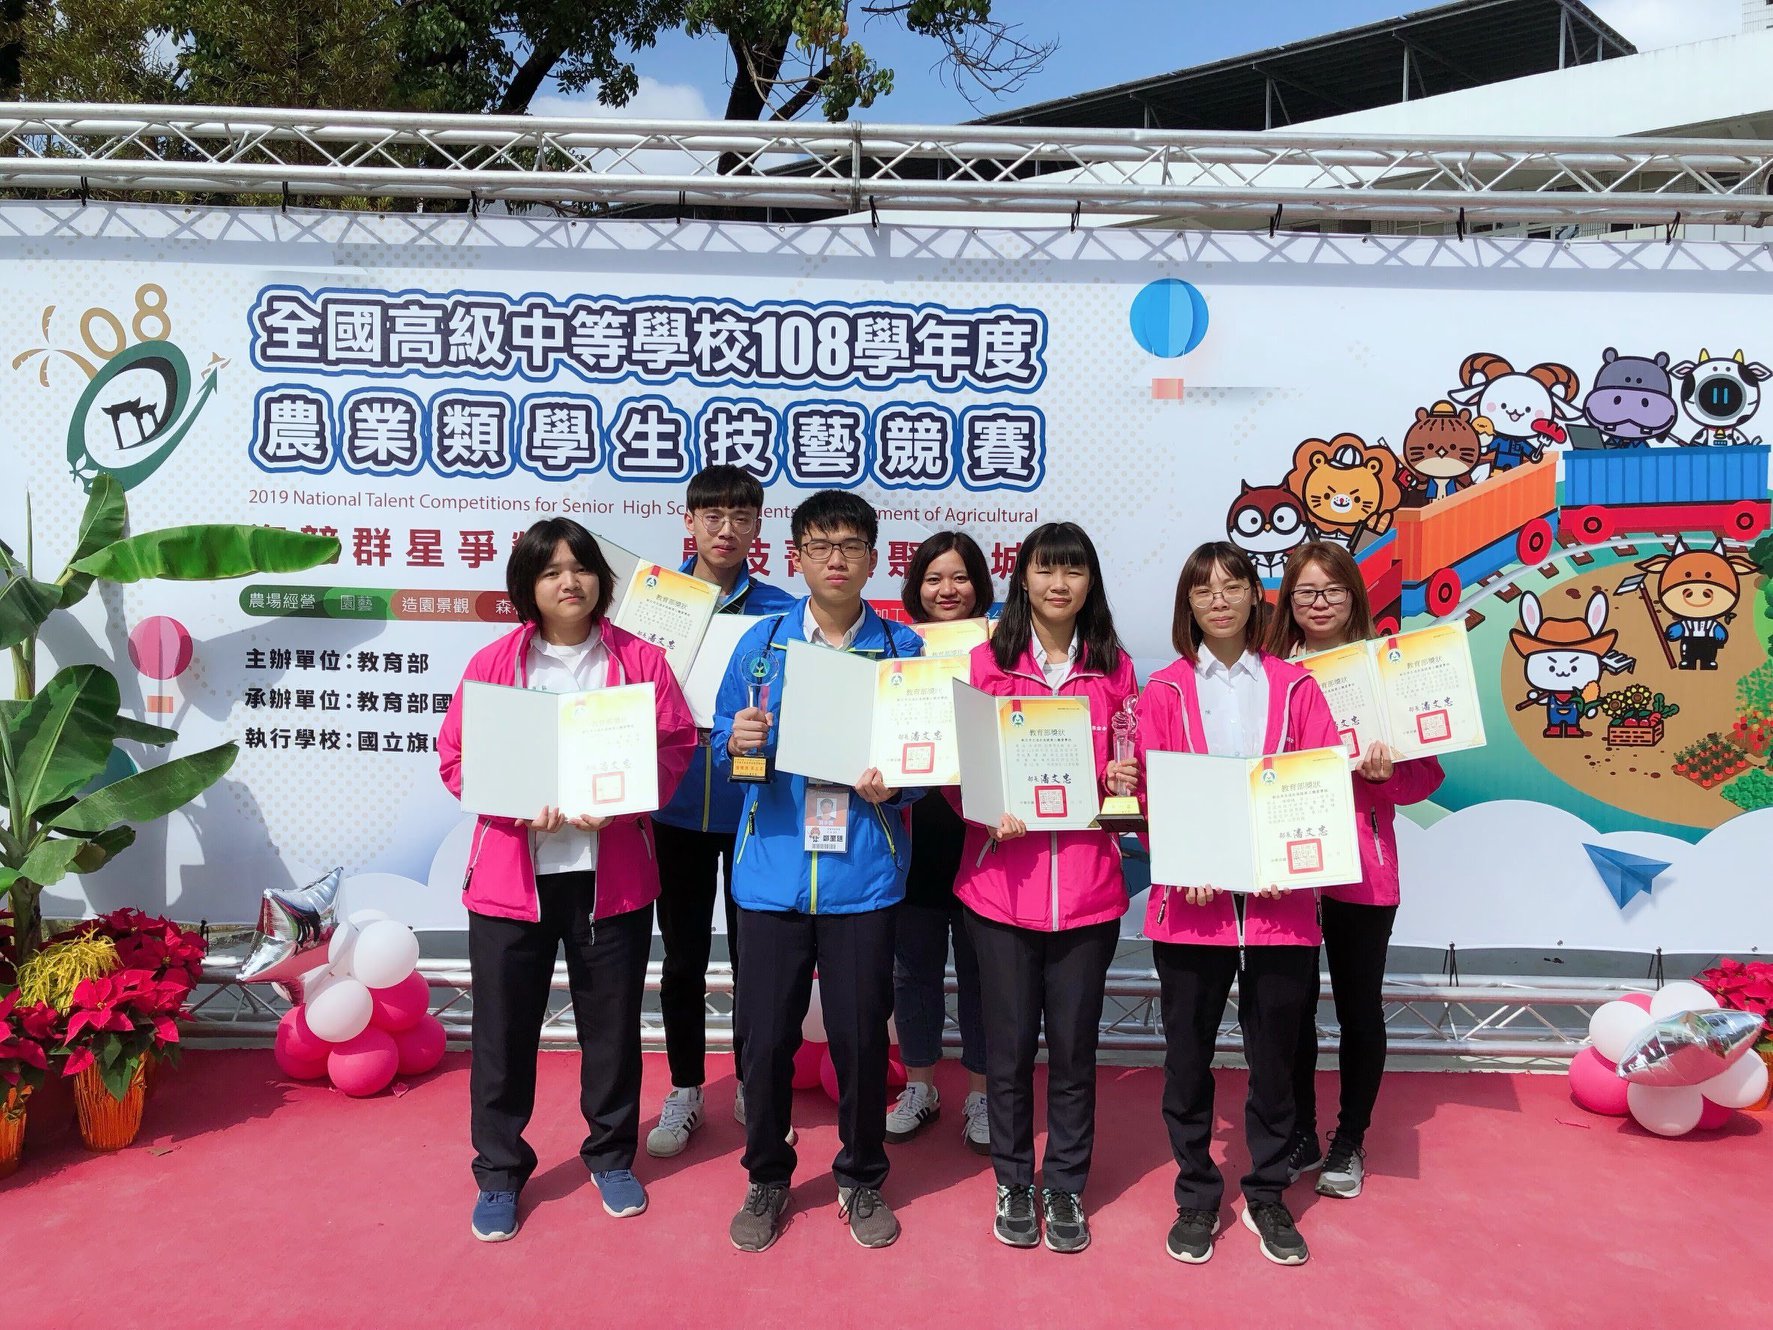 Jiang Qihui (ke-3 dari kanan) telah memenangkan tempat pertama dalam Kontes Ilmiah dan Teknologi Pertanian Lansekap Lansekap Tangan Emas, dan kelompok tersebut memenangkan tempat ketiga di negara itu. (Halaman Facebook Kantor praktik Komersial dan Industri Danshui)